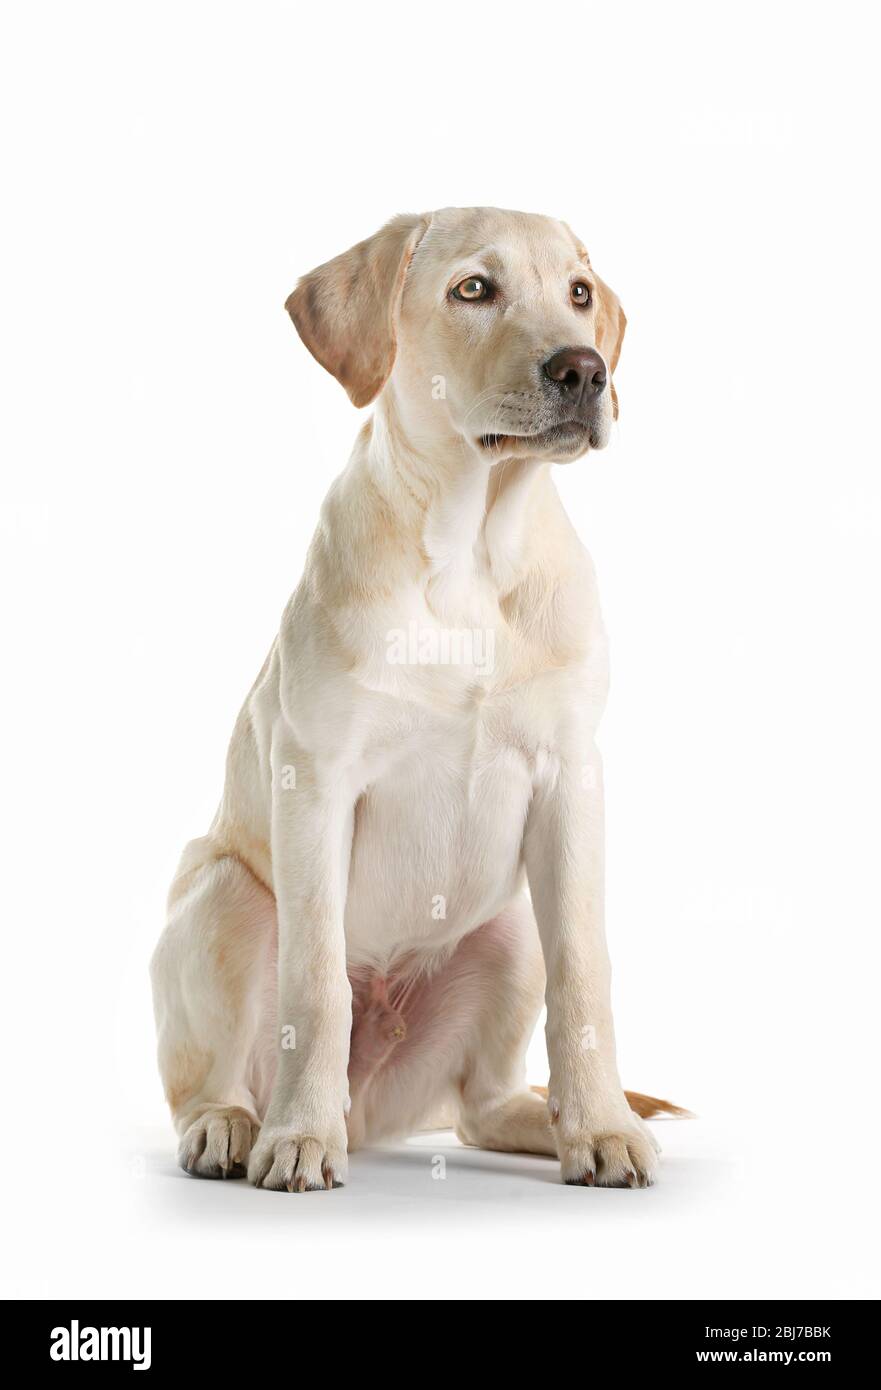 Cute Labrador dog sitting isolated on white Stock Photo - Alamy